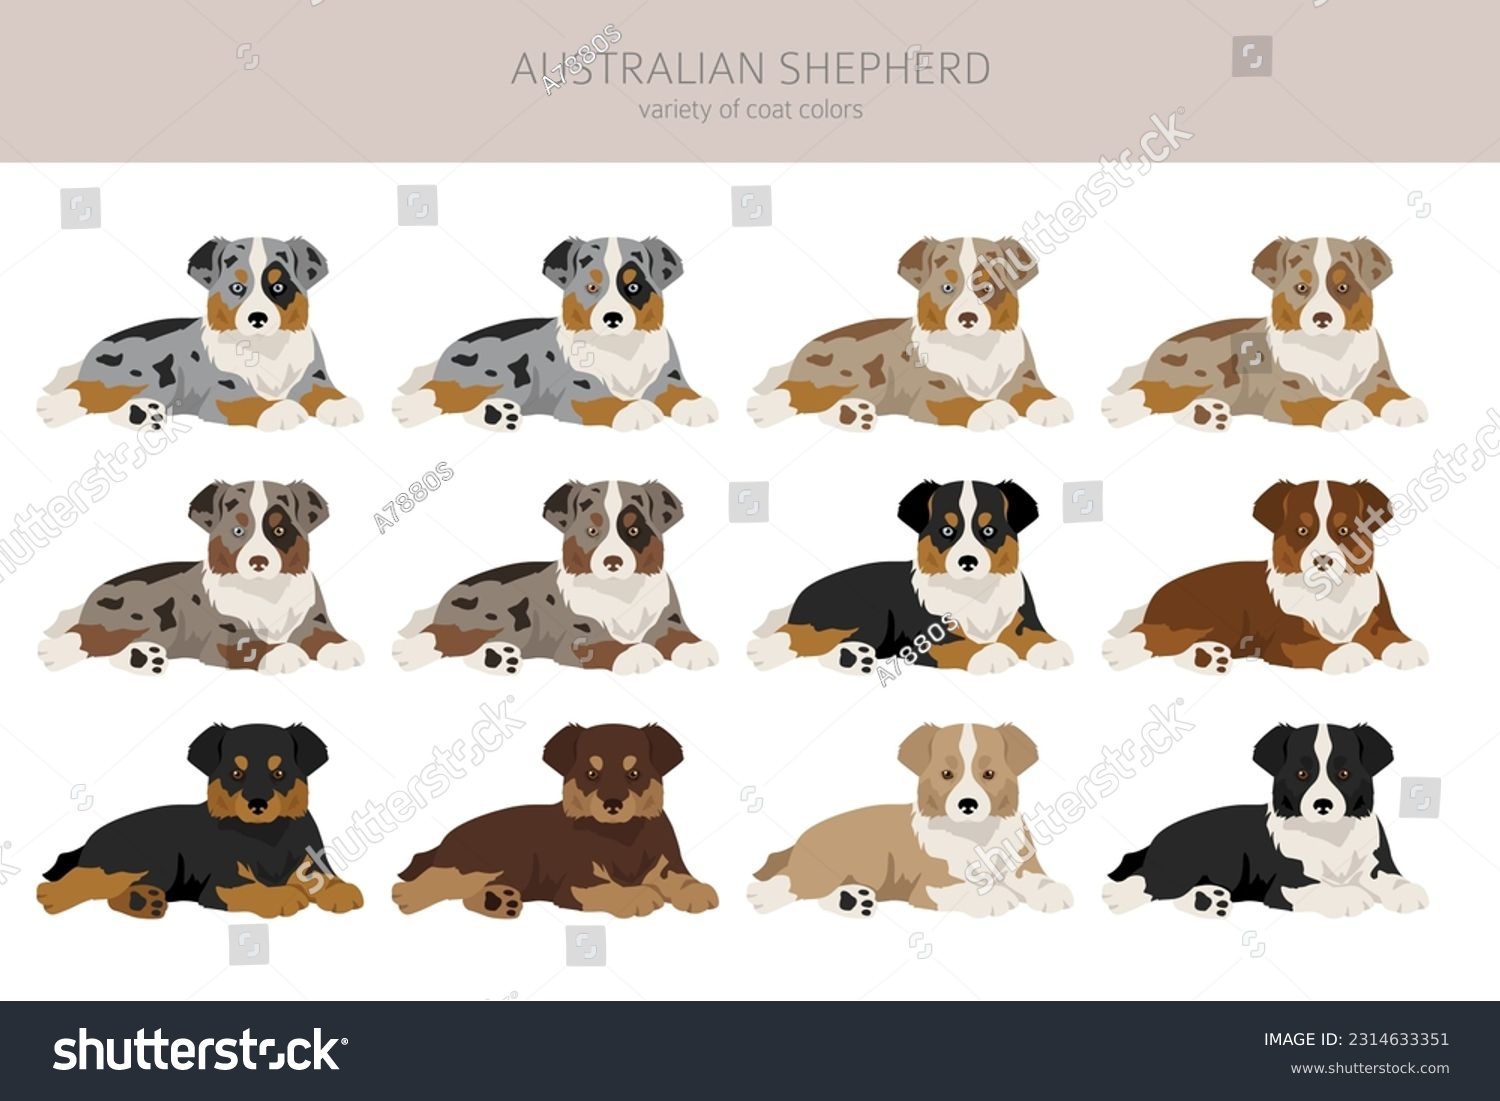 SVG of Australian shepherd puppies clipart. Coat colors Aussie set.  All dog breeds characteristics infographic. Vector illustration svg